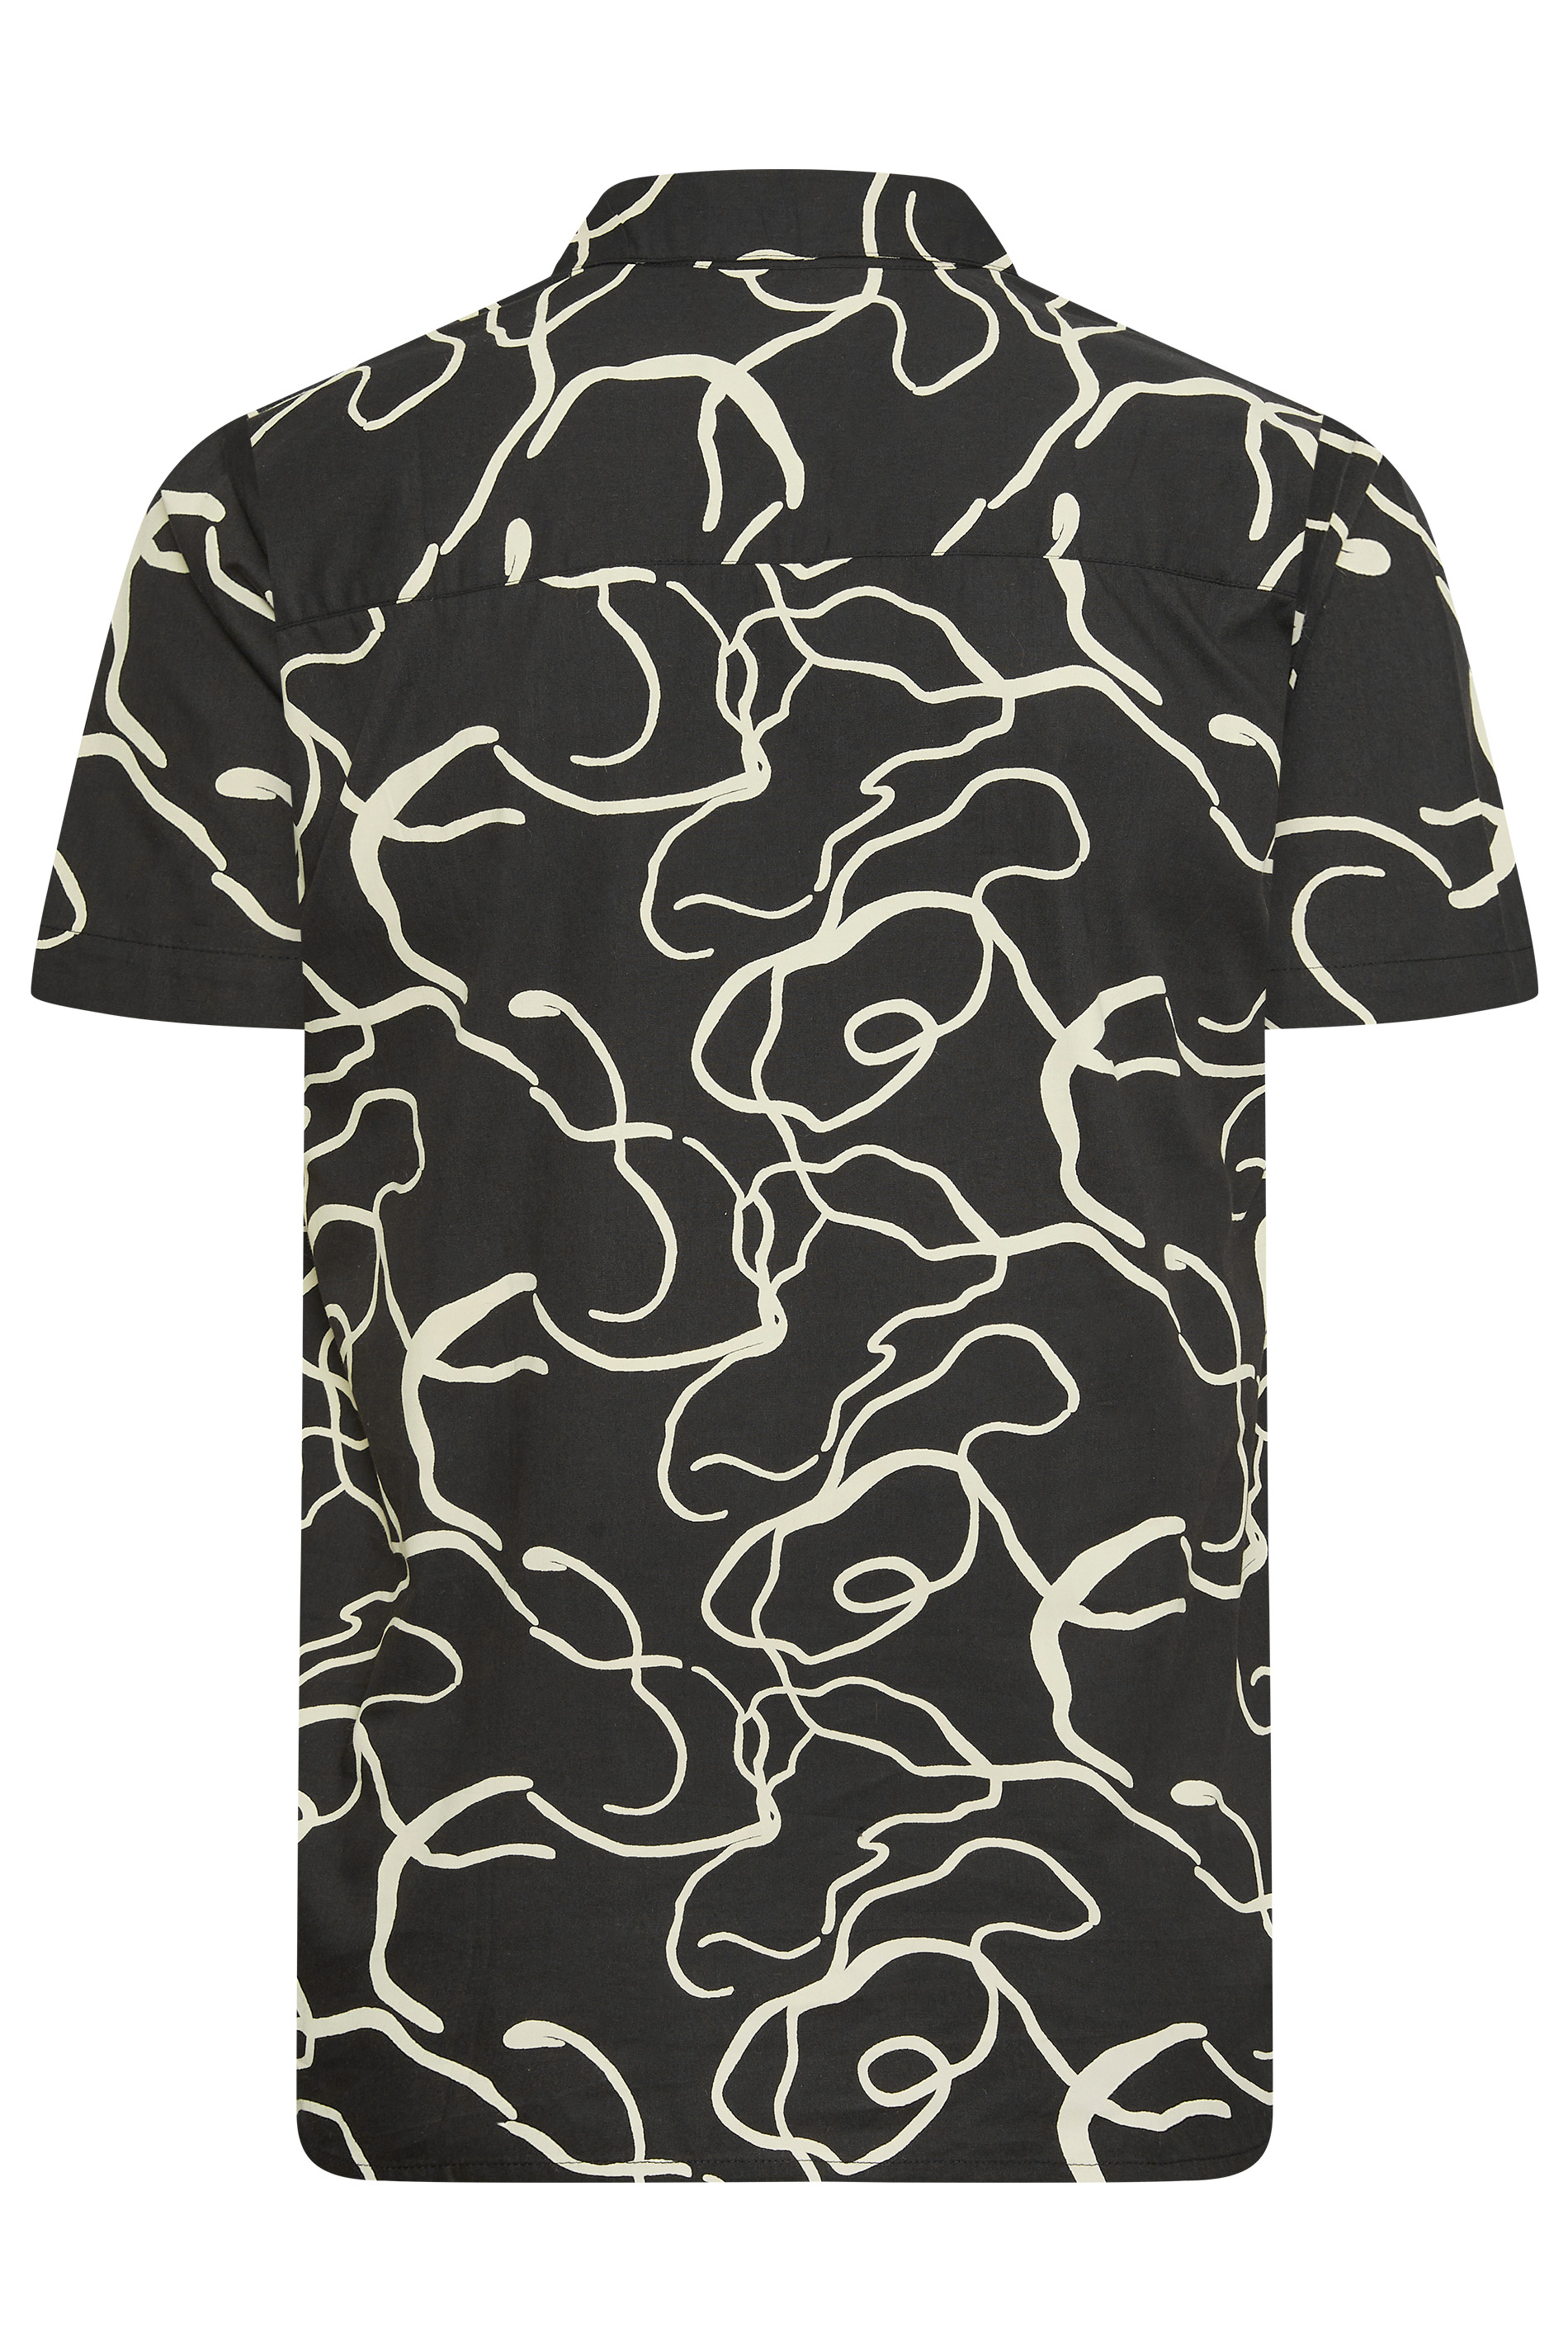 BadRhino Big & Tall Black Abstract Print Short Sleeve Shirt | BadRhino 3